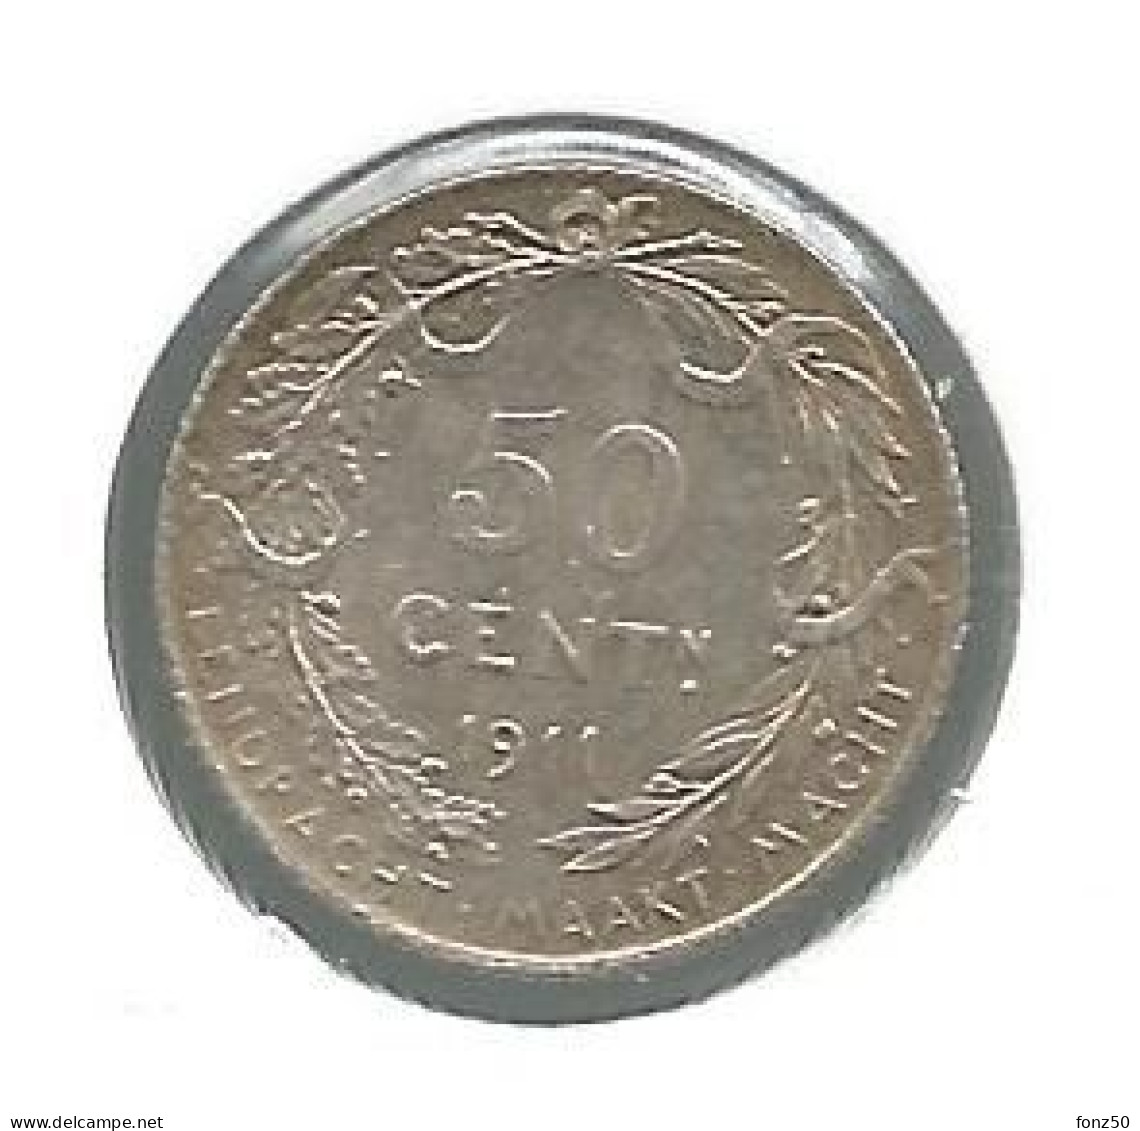 ALBERT I * 50 Cent 1911 Vlaams * Prachtig / FDC * Nr 12795 - 1 Franco